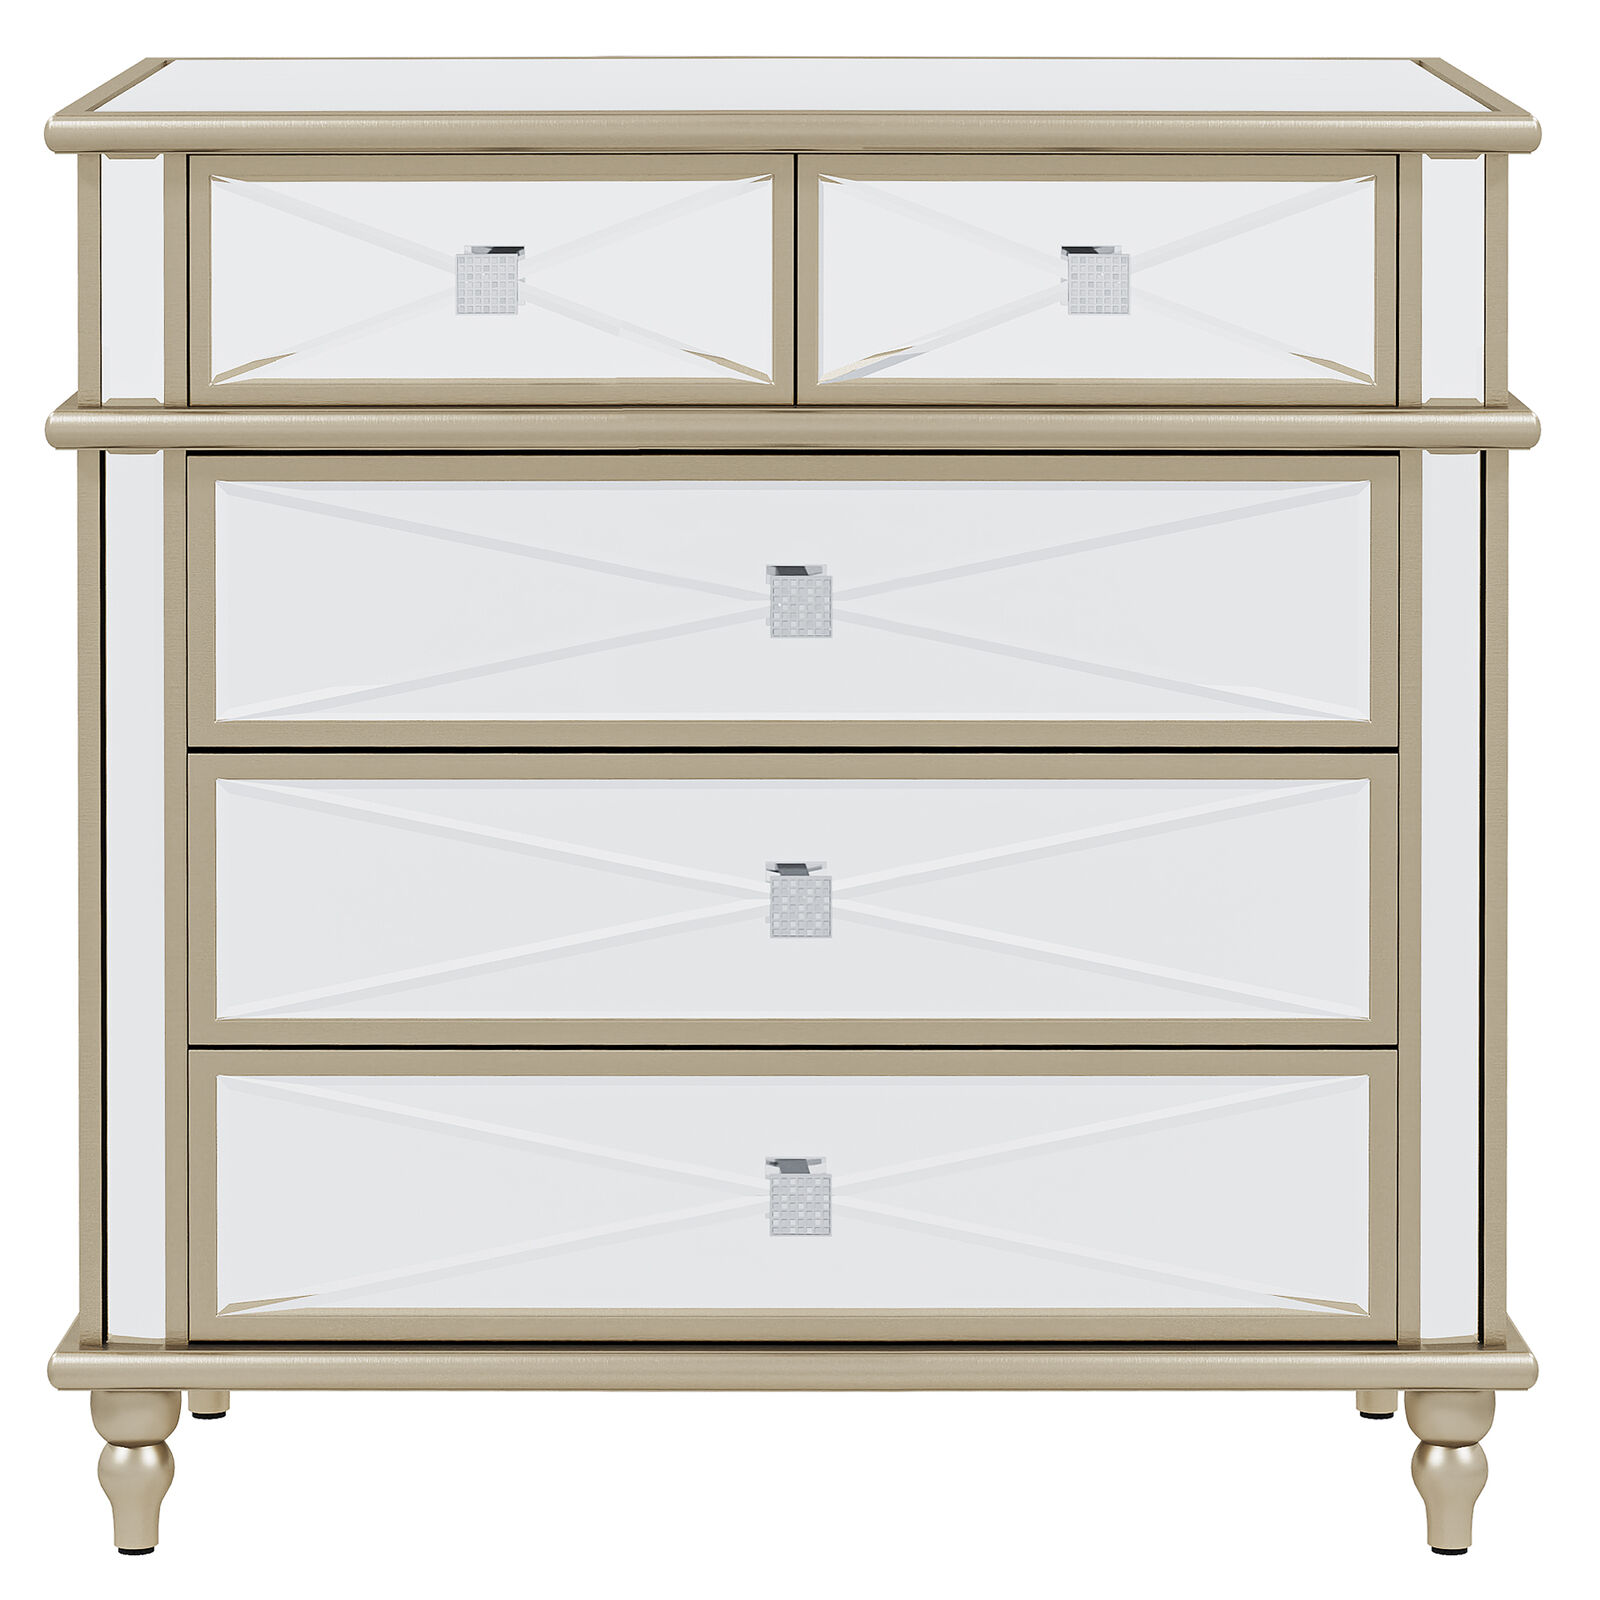 Modern 5 Drawer Mirrored Storage Chest Dresser Sideboard Cabinet for Living Room